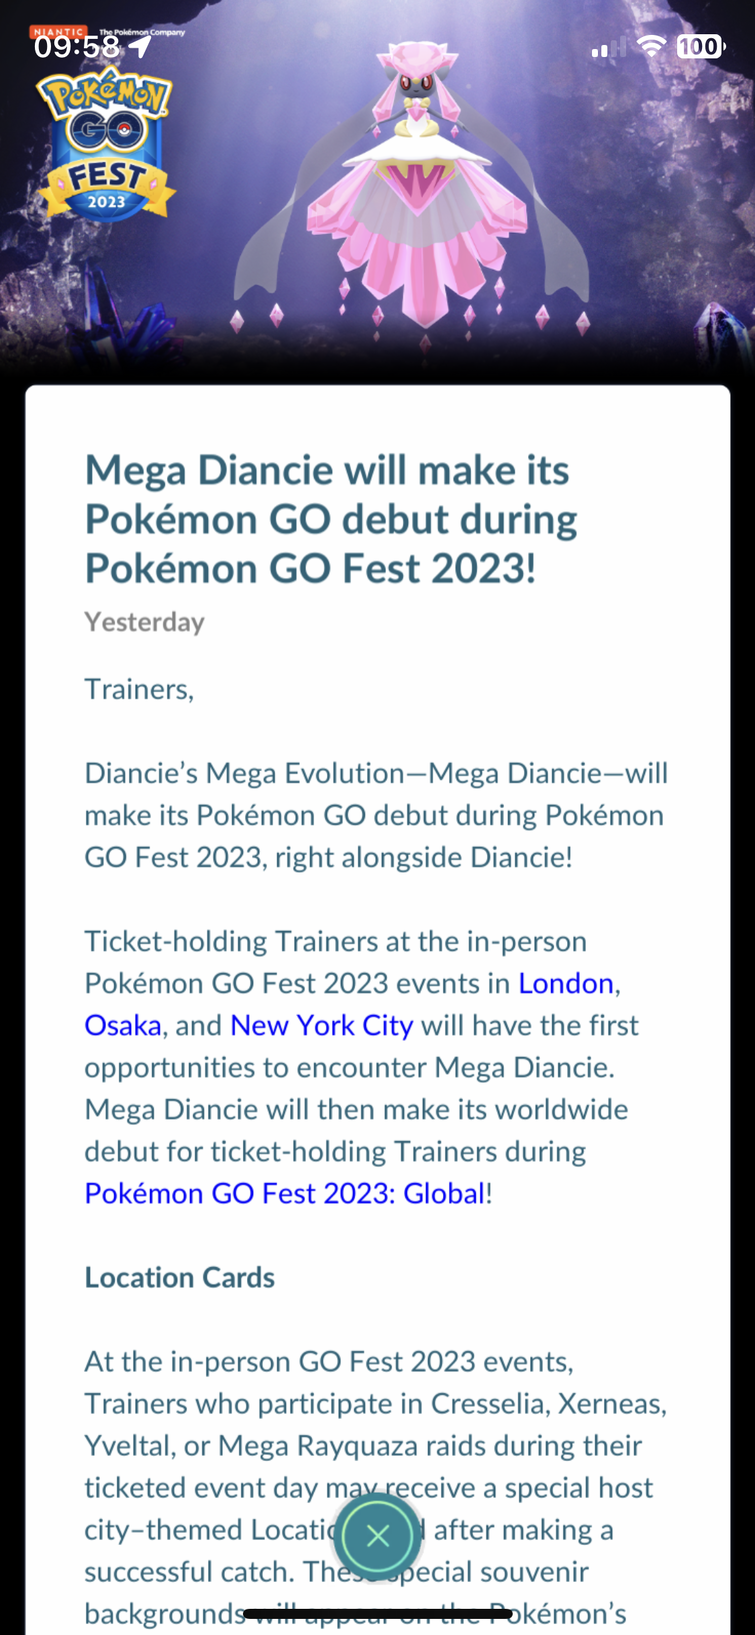 Pokemon Go Fest 2023: How To Complete Mega Rayquaza Research & Rewards